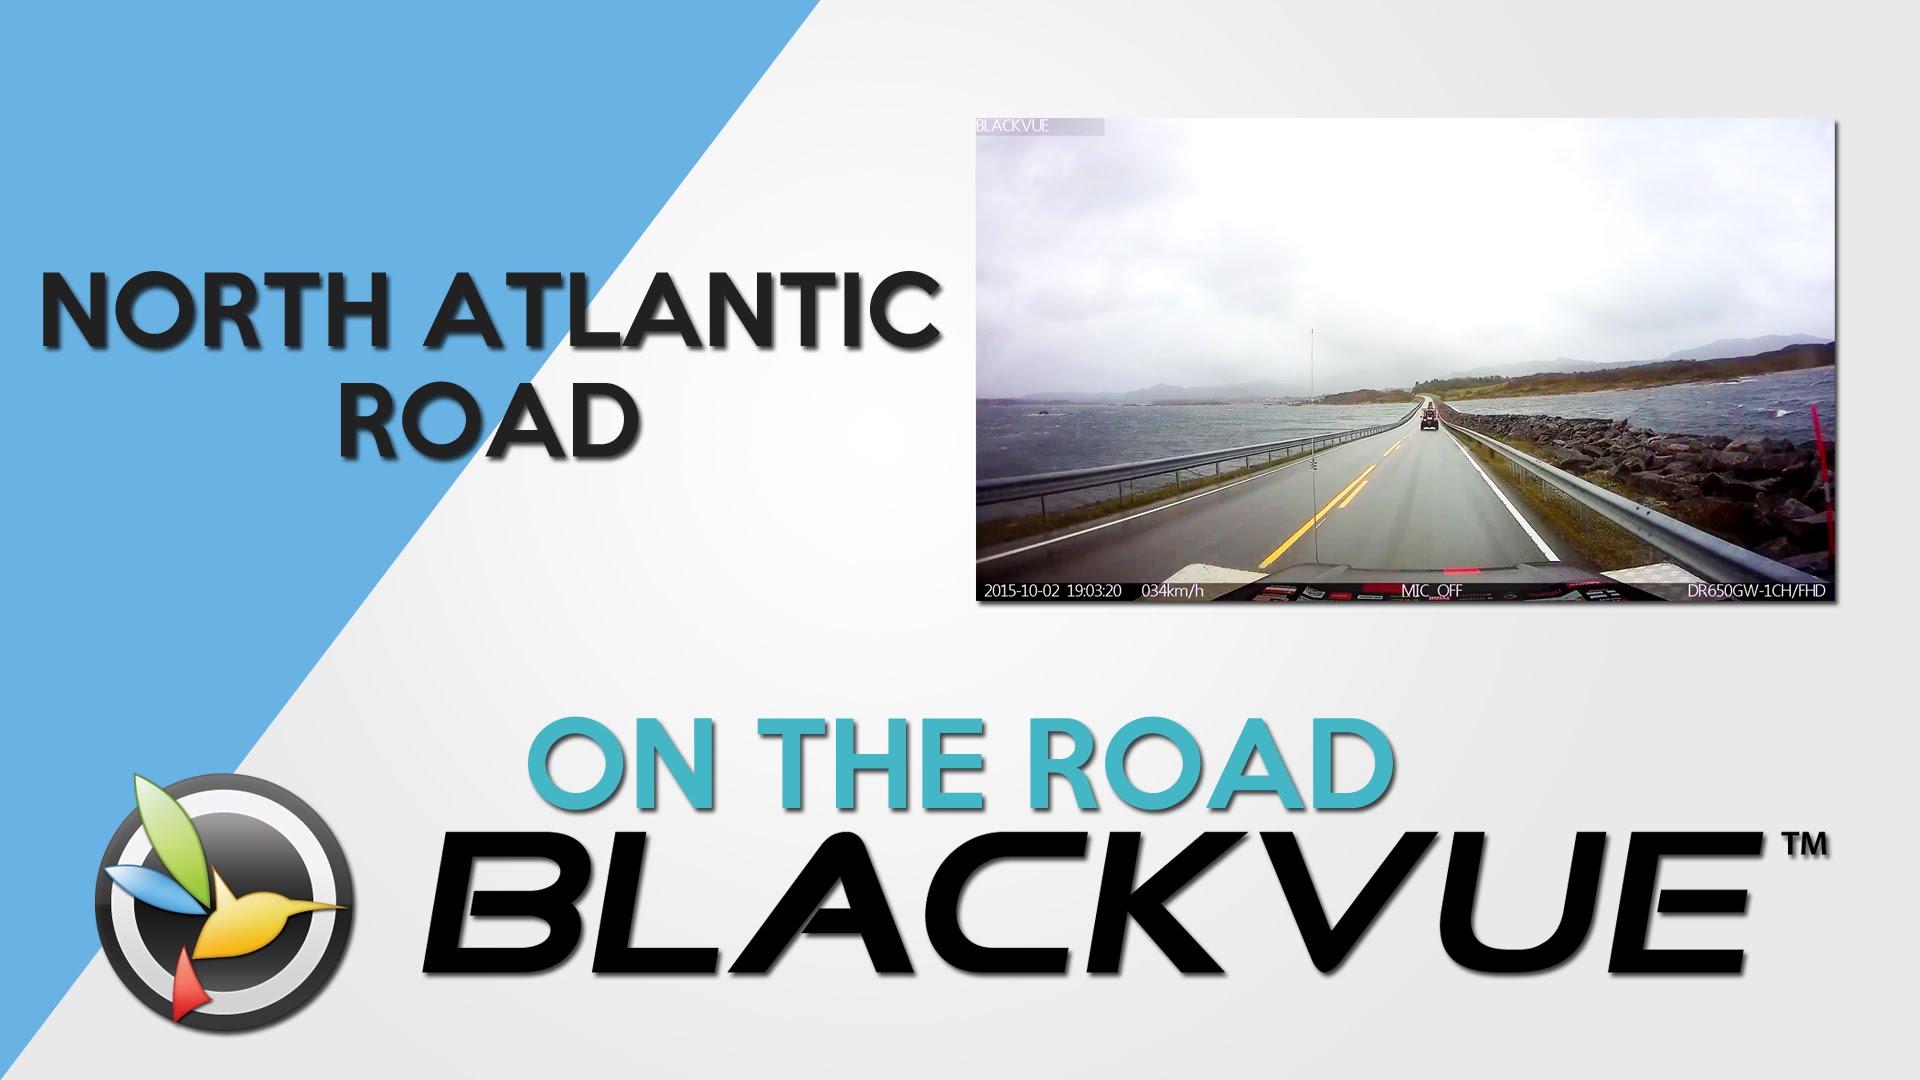 BLACKVUE ON THE ROAD: North Atlantic Road